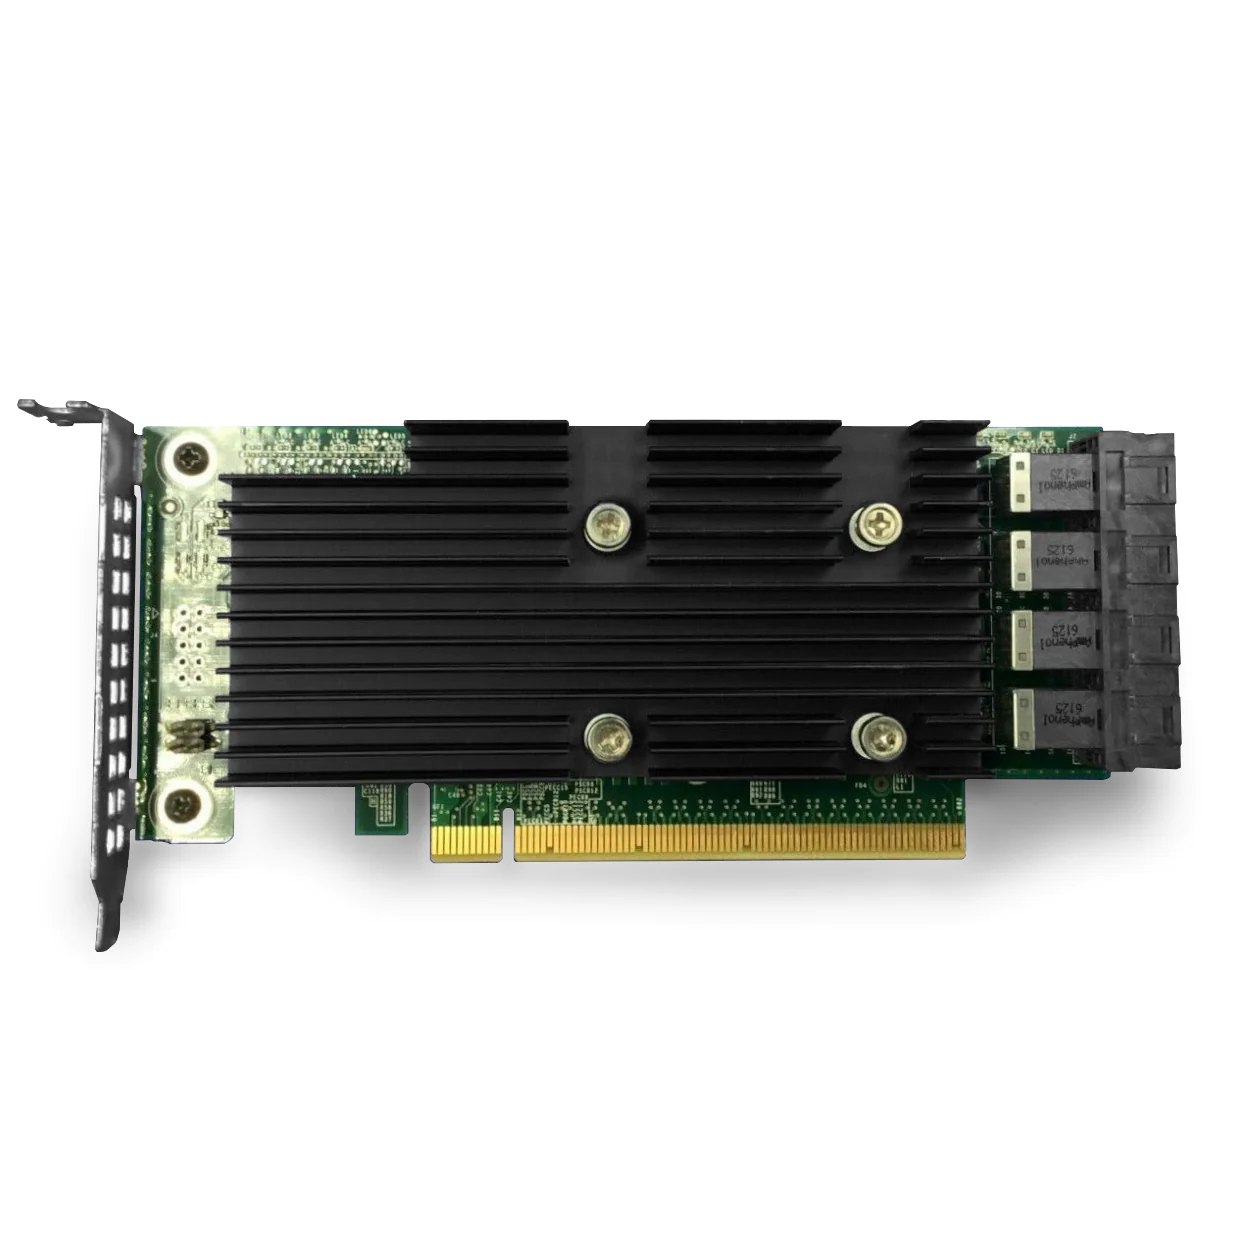 PowerEdge Express Flash NVMe PCIe SSD